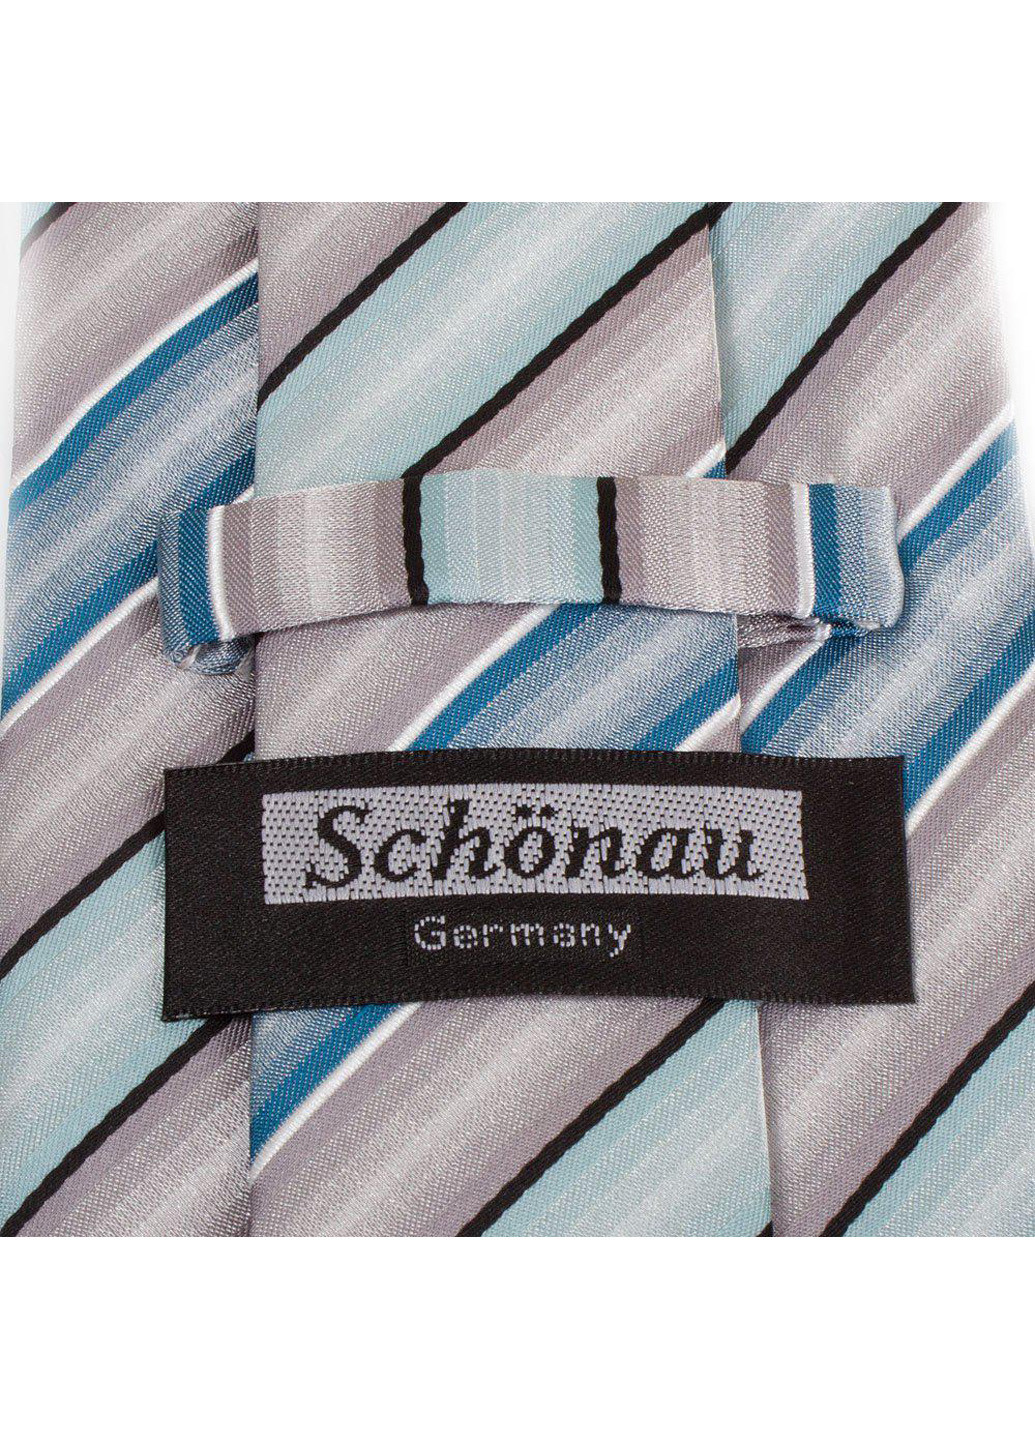 Мужской галстук 148,5 см Schonau & Houcken (195538888)